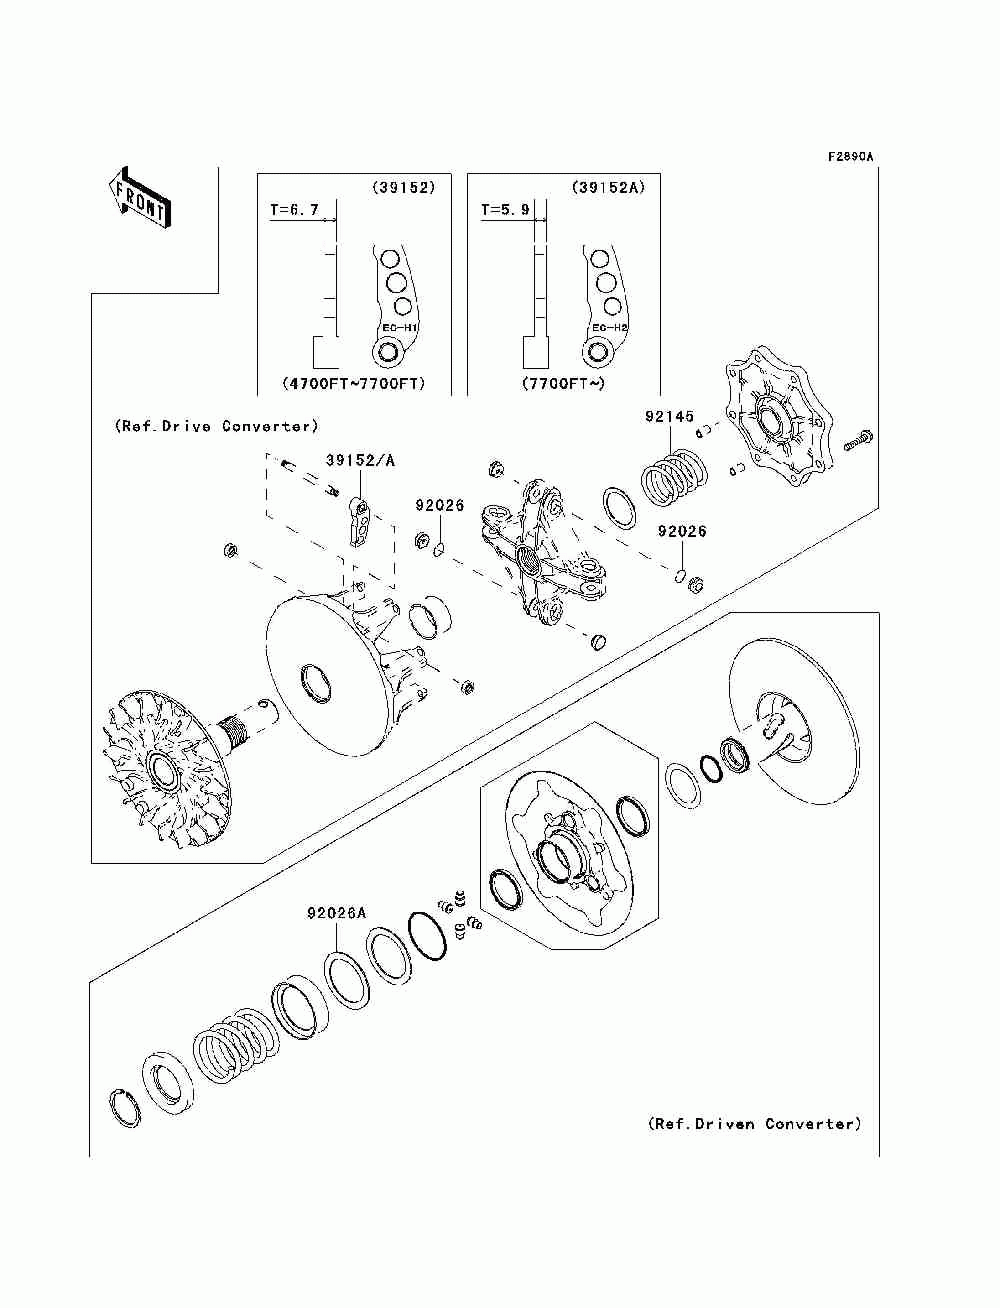 Optional parts(converter)